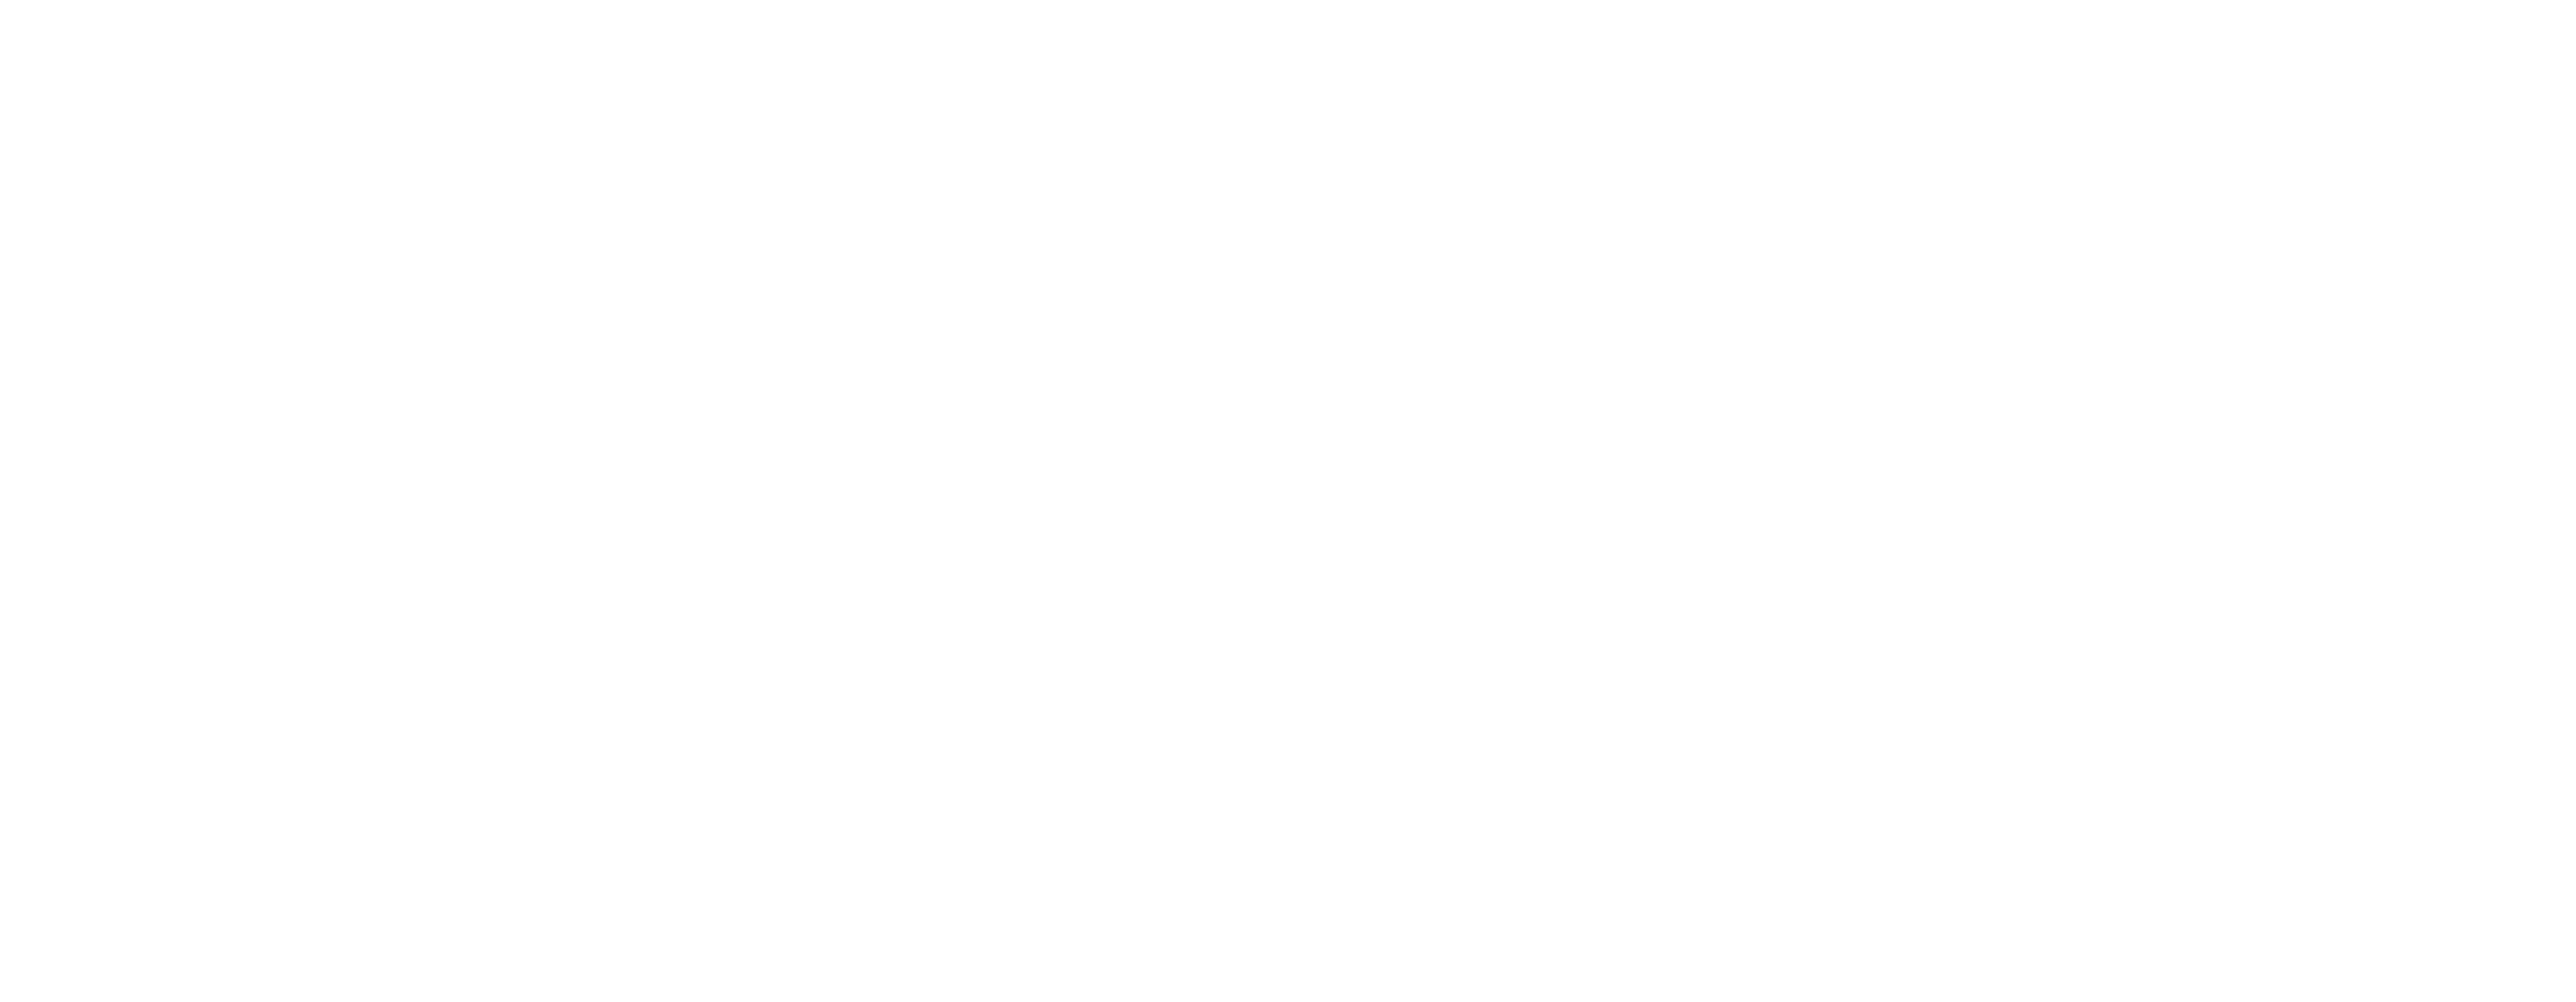 design with frank logo white